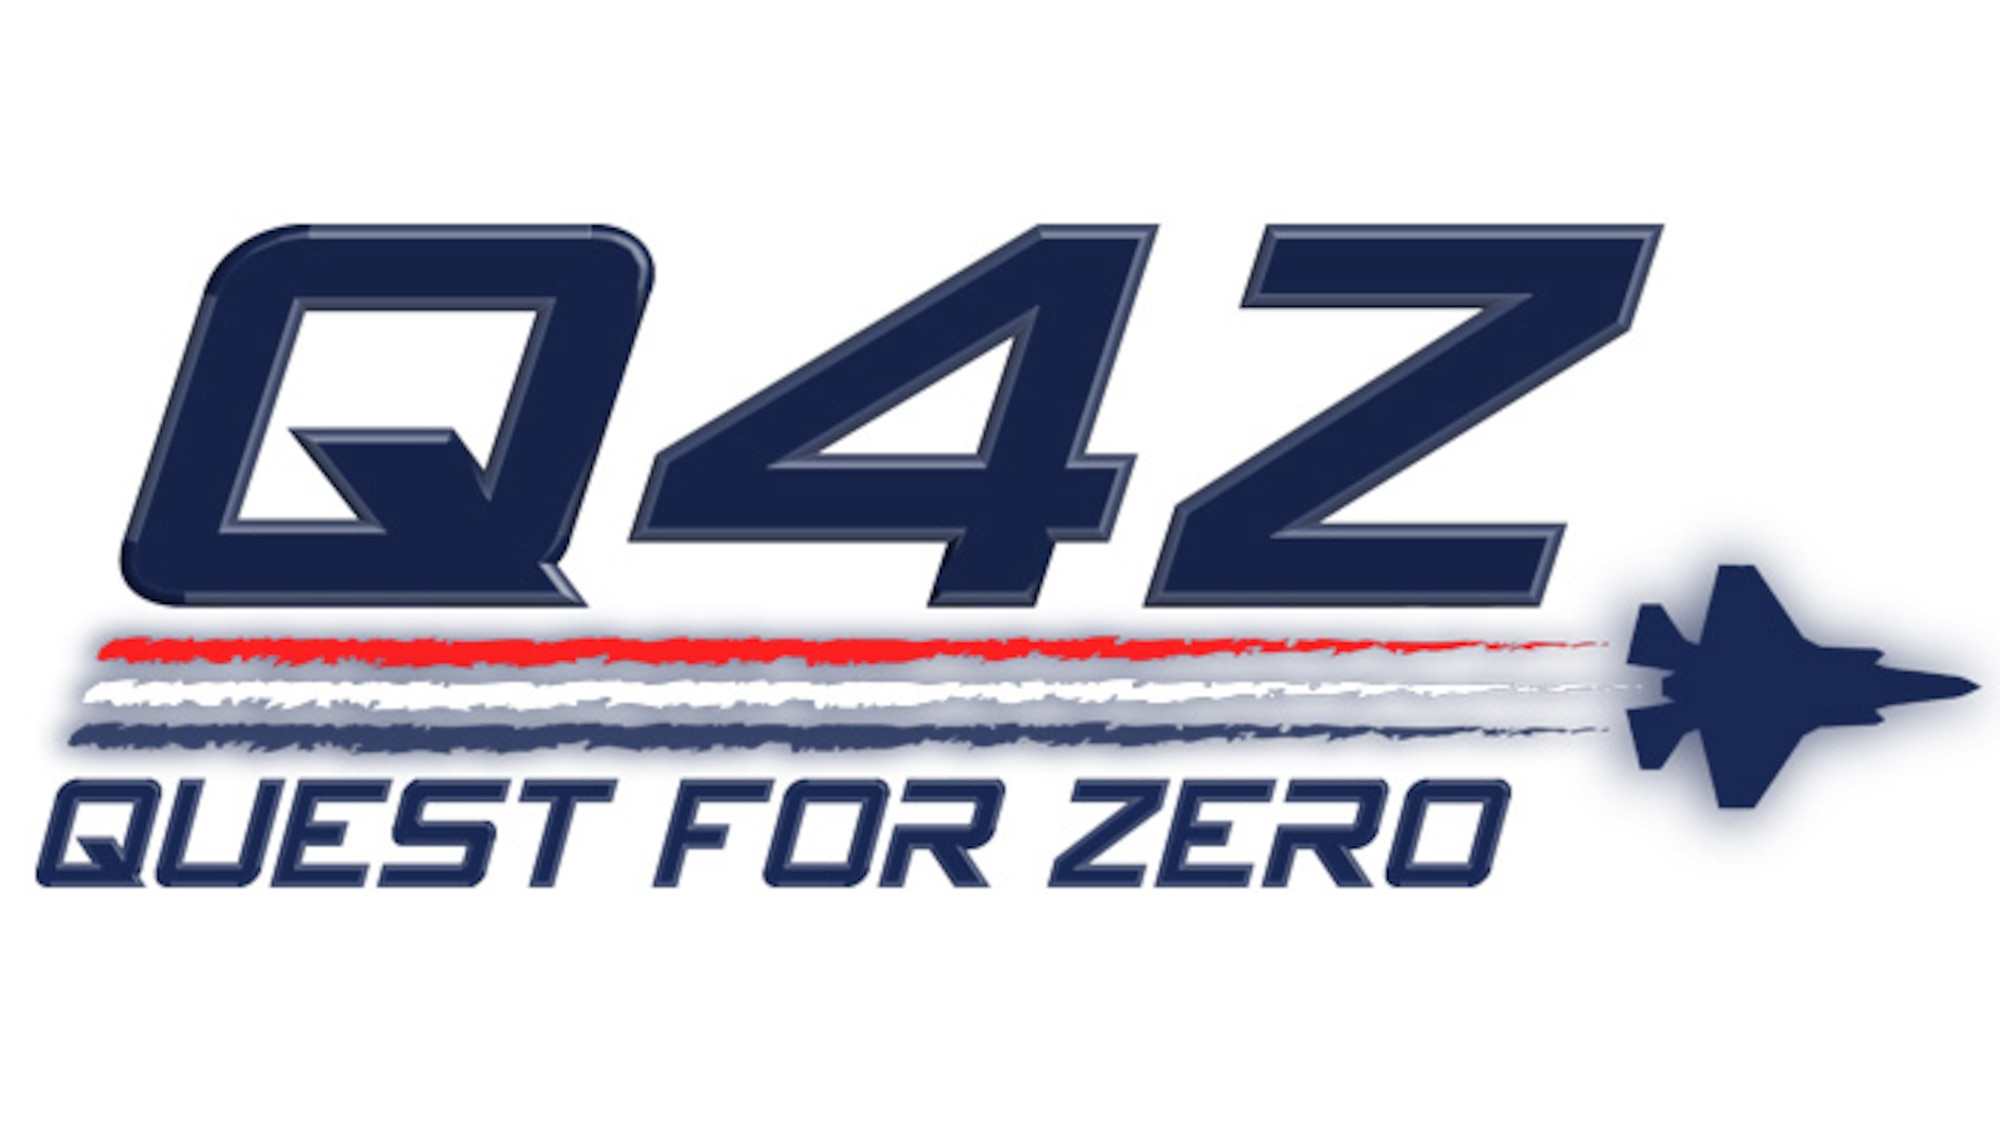 Quest for Zero